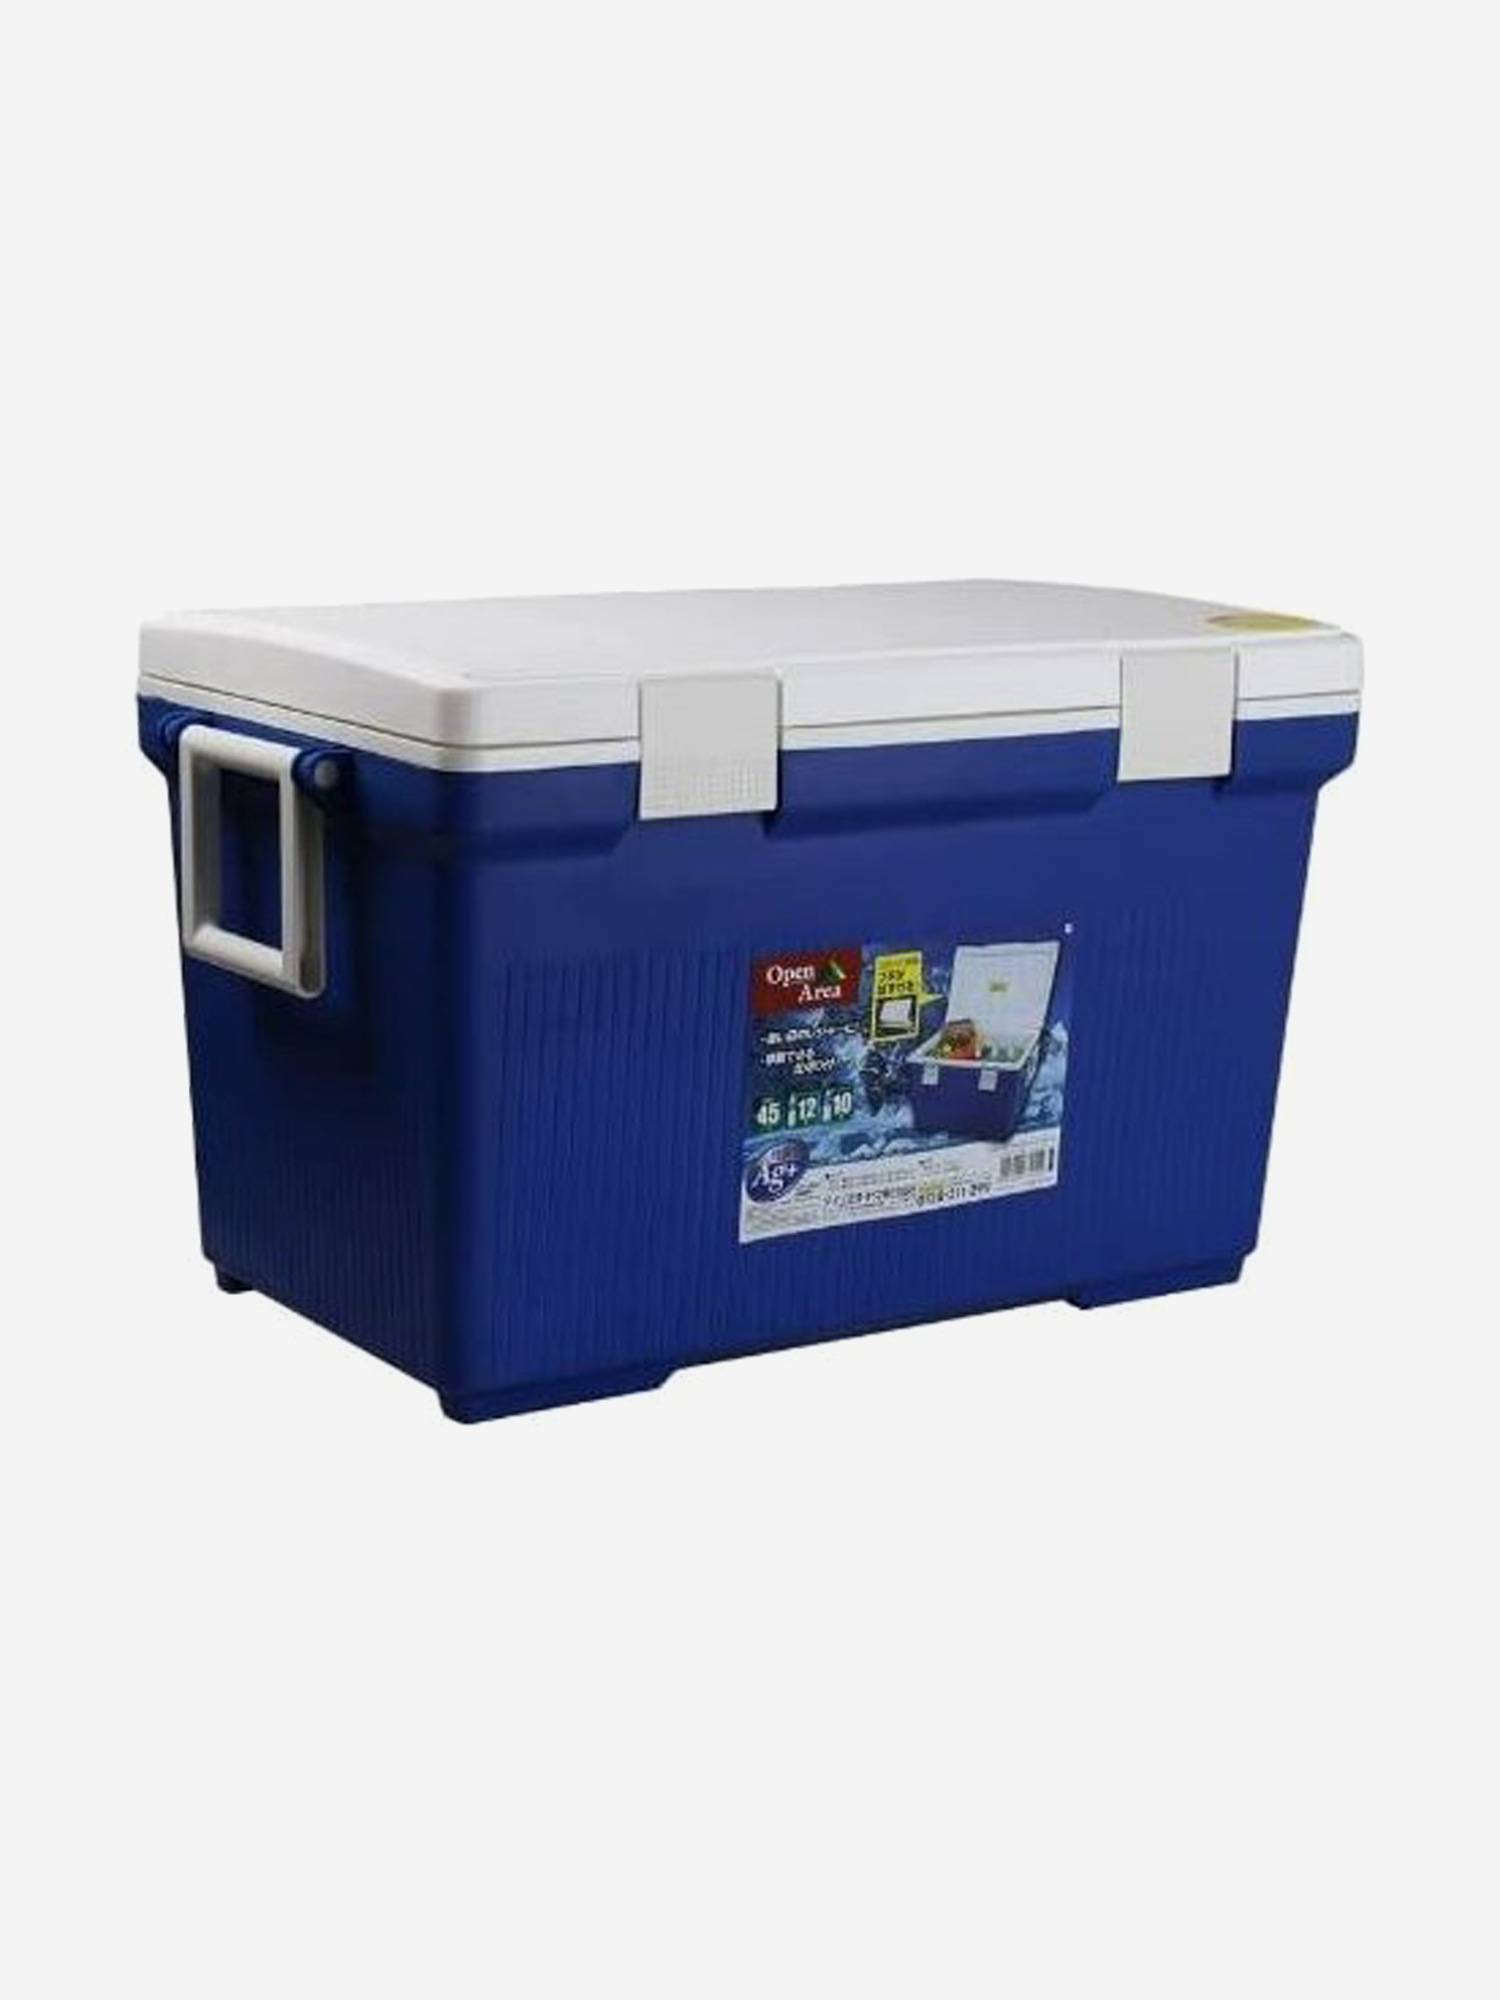 Термобокс IRIS OHYAMA Cooler Box CL-45, 45 литров, синий/белый, Синий